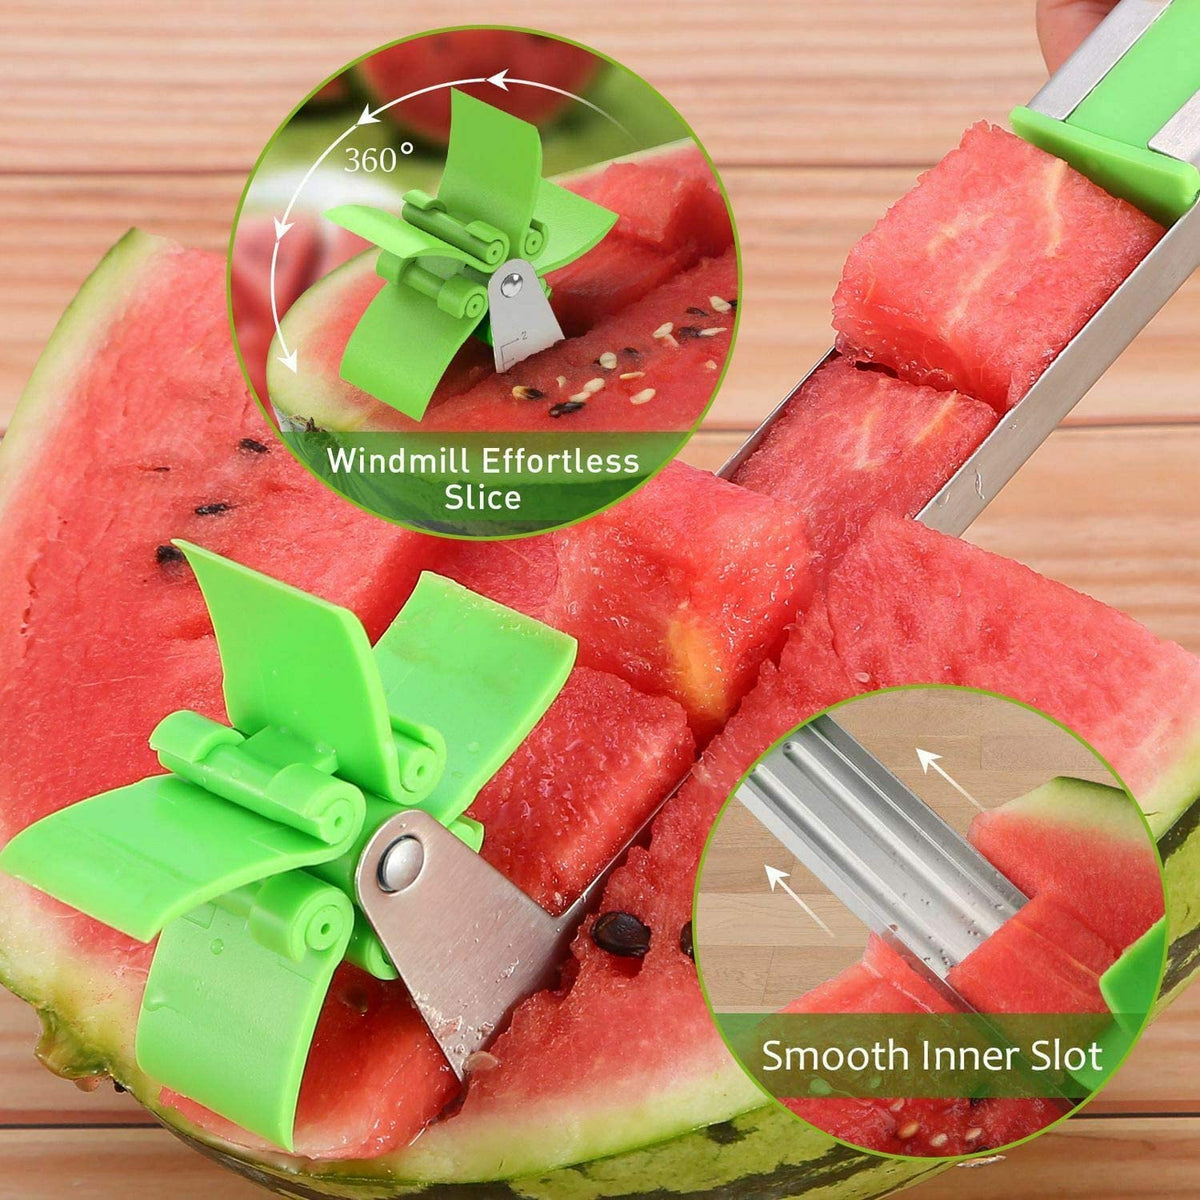 Stainless Steel Watermelon Cutter Windmill Shape Design Slicer Cutter Kitchen Gadgets Salad Fruit Slicer Cutter Tool - TheWellBeing1